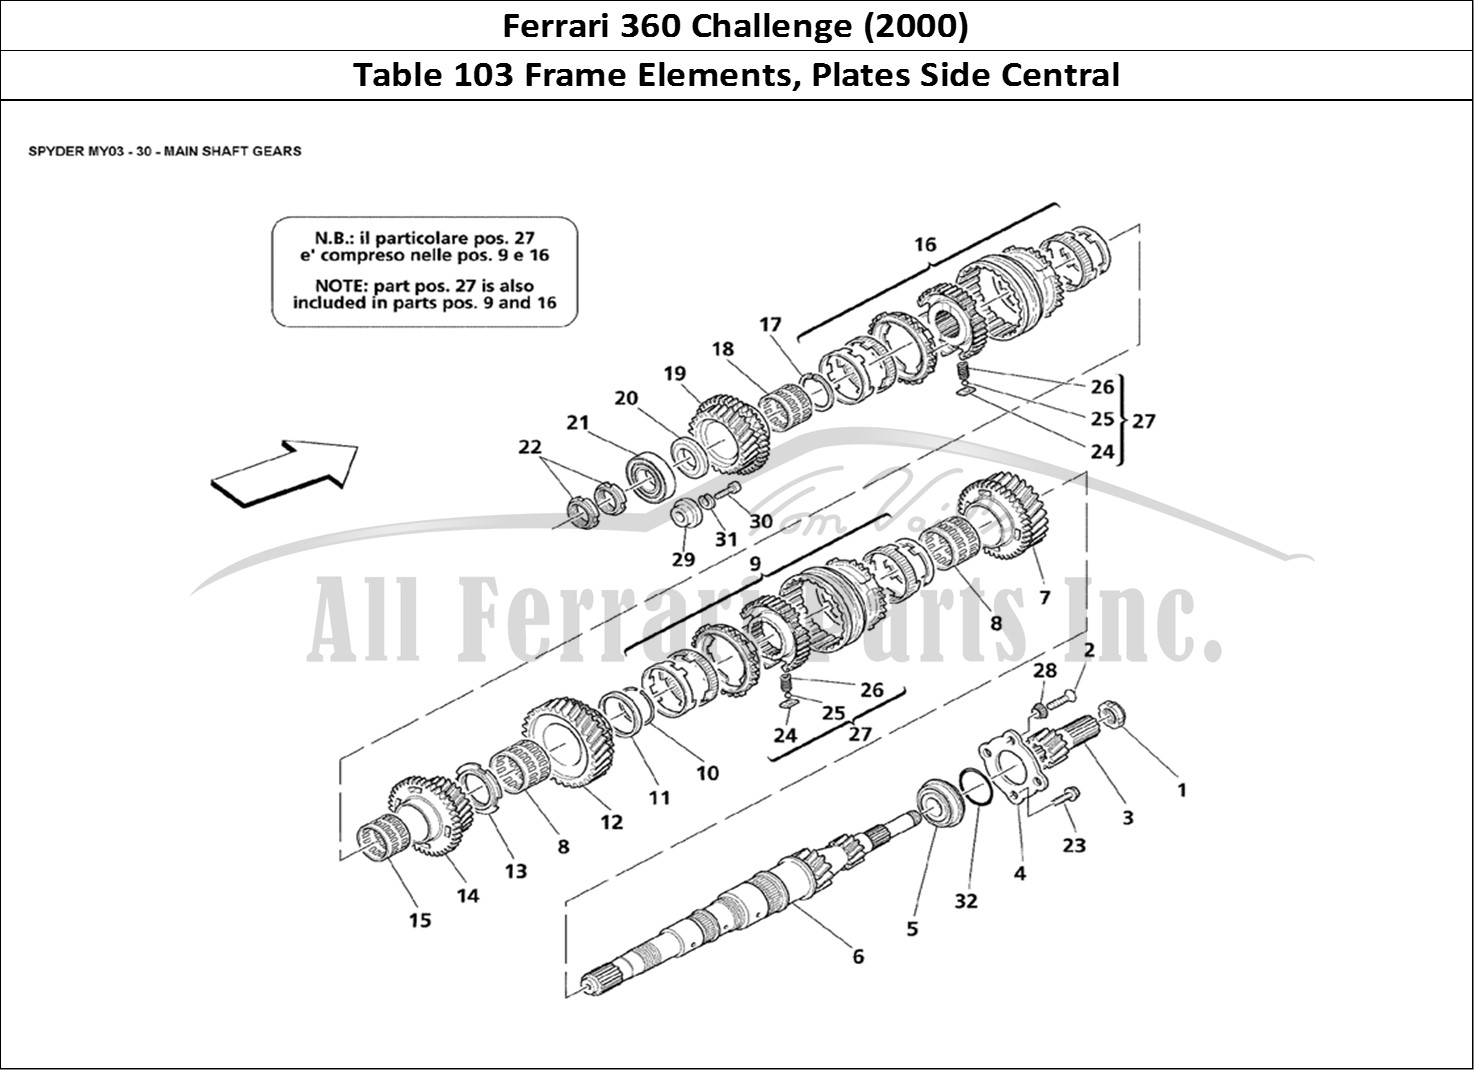 Ferrari Parts Ferrari 360 Challenge (2000) Page 103 Central Side Elements and